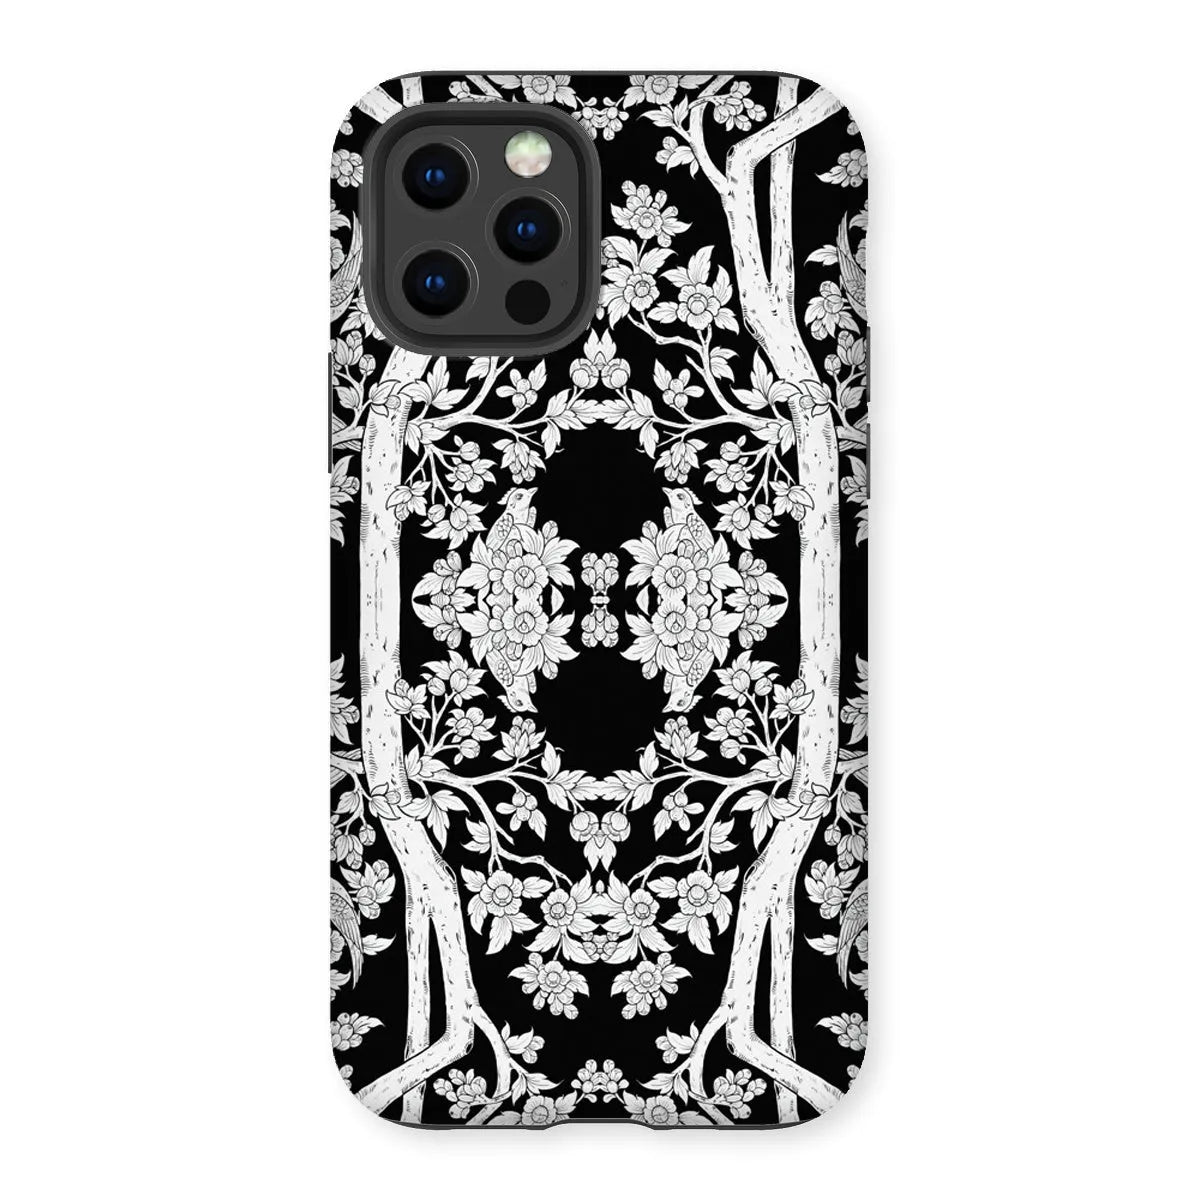 Aviary Black Aesthetic Pattern Art Phone Case - Iphone 12 Pro / Matte - Mobile Phone Cases - Aesthetic Art